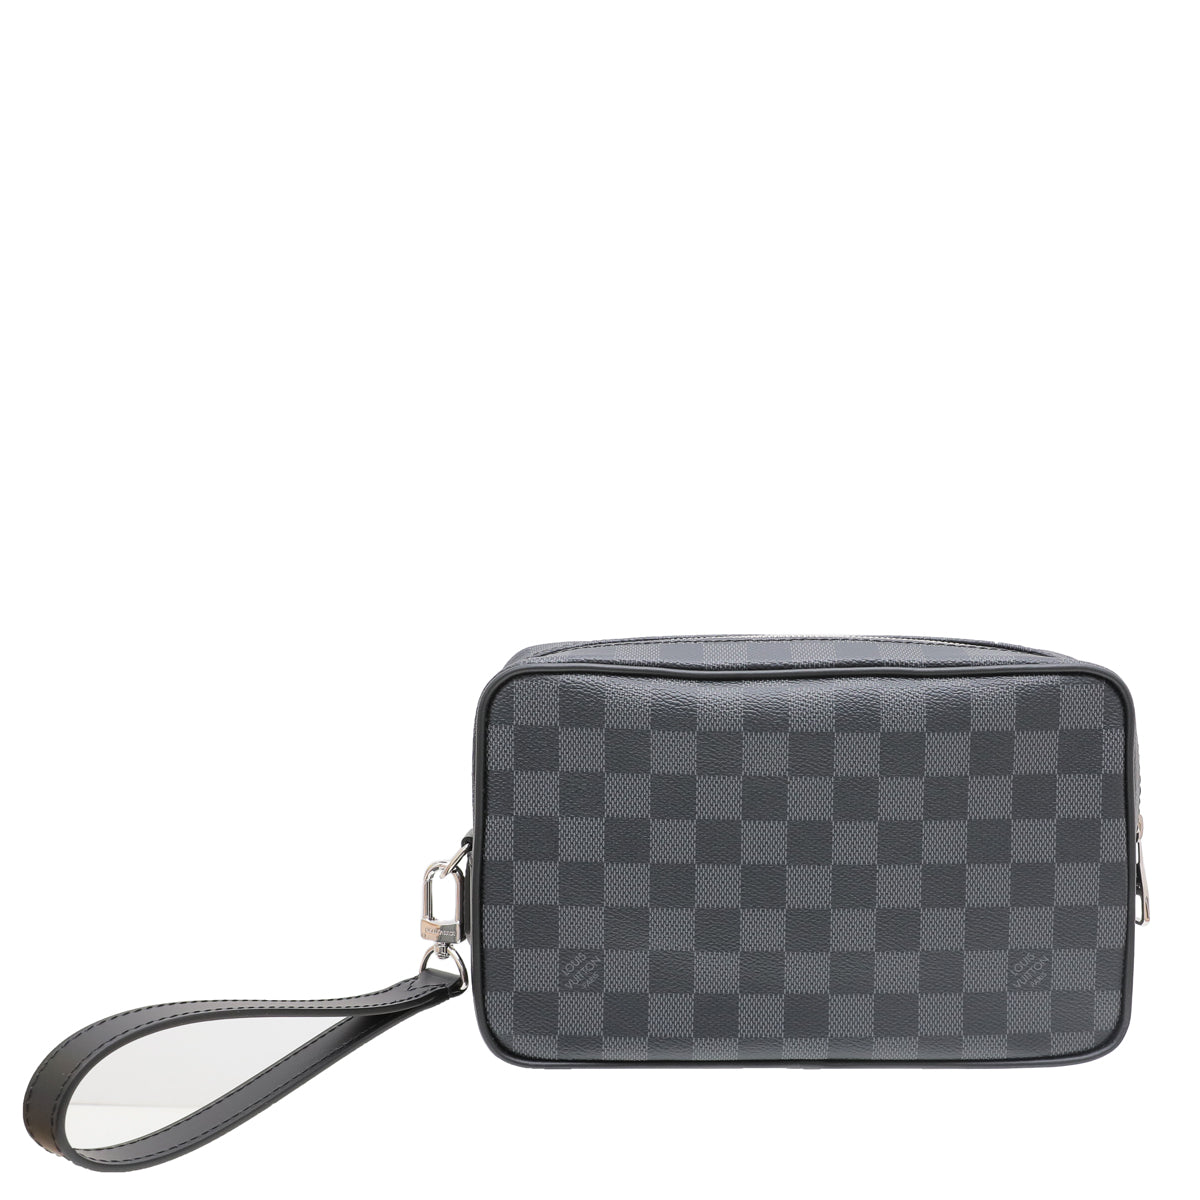 Men LV Louis Vuitton Damier Kasai Clutch Handbag N41664 Leather